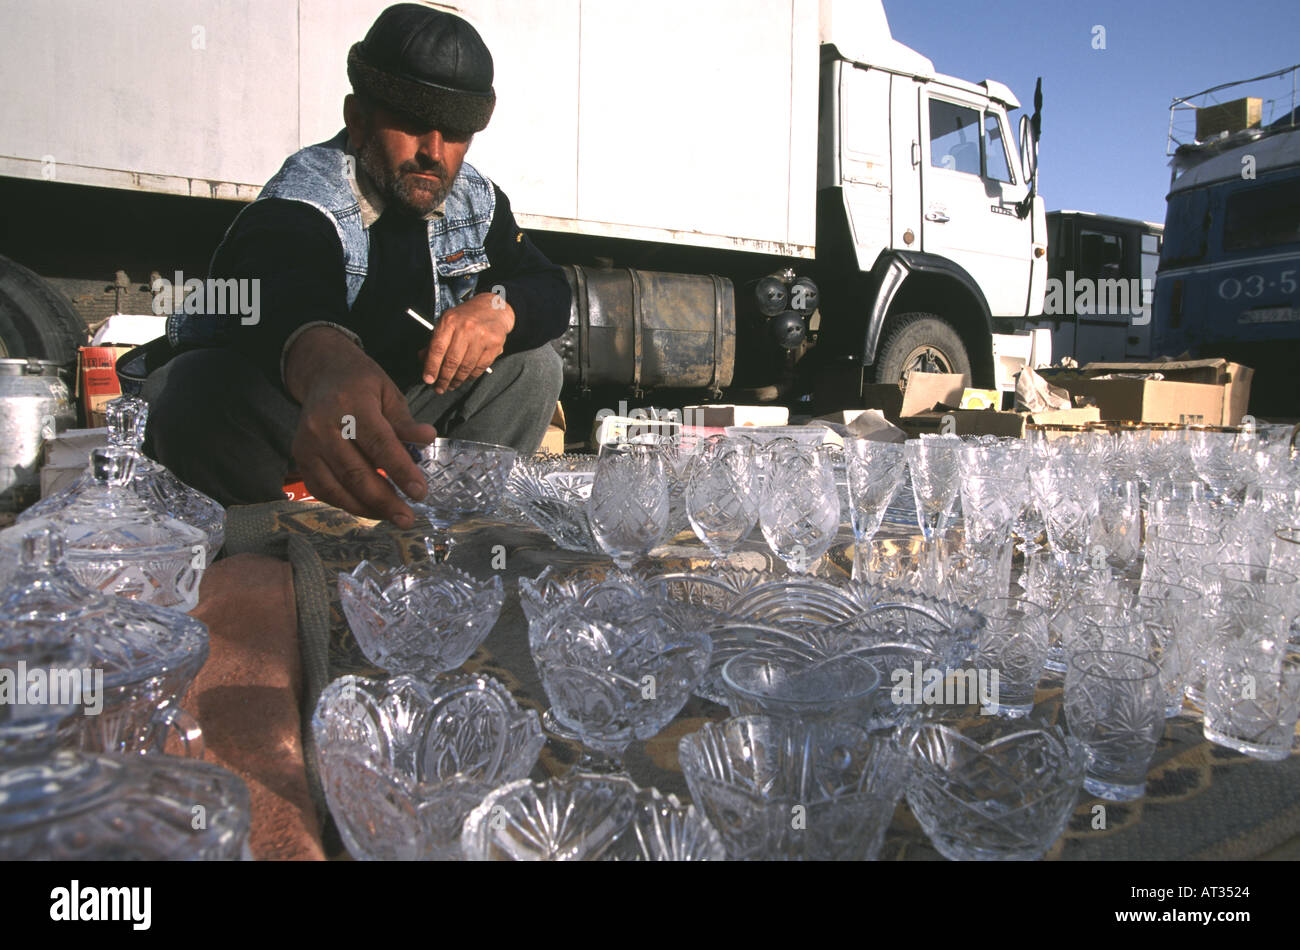 Dagestani prilgrim on his way home from the haj to Mecca sells glassware in Amman Jordan Stock Photo